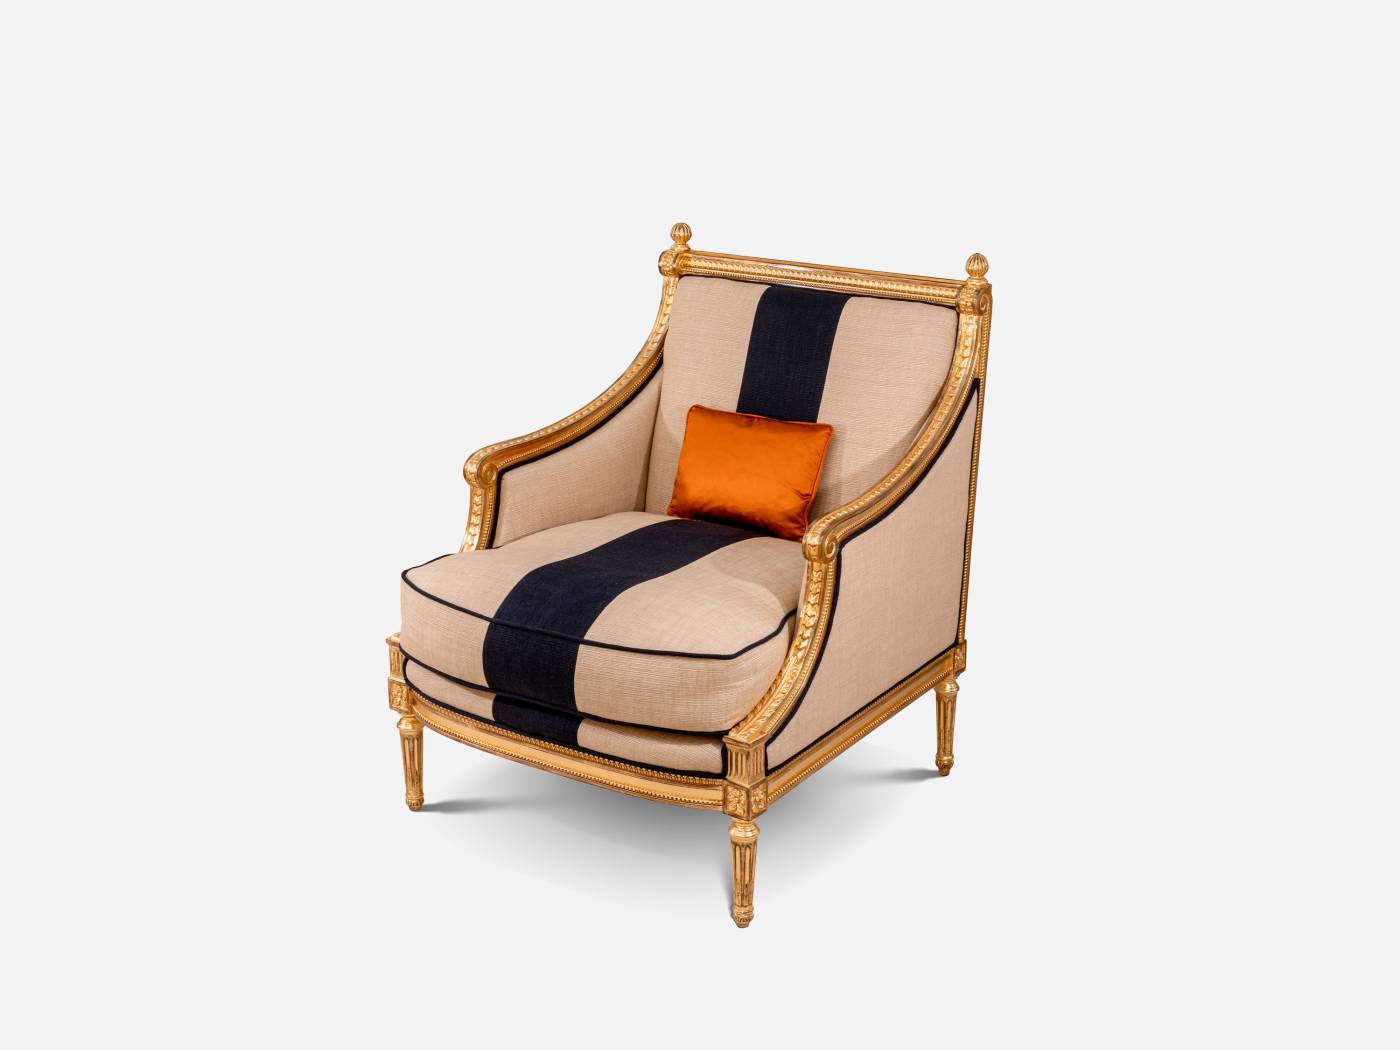 ART. 2304/1 – C.G. Capelletti Italian Luxury Classic Armchairs. Made in Italy classic interior design